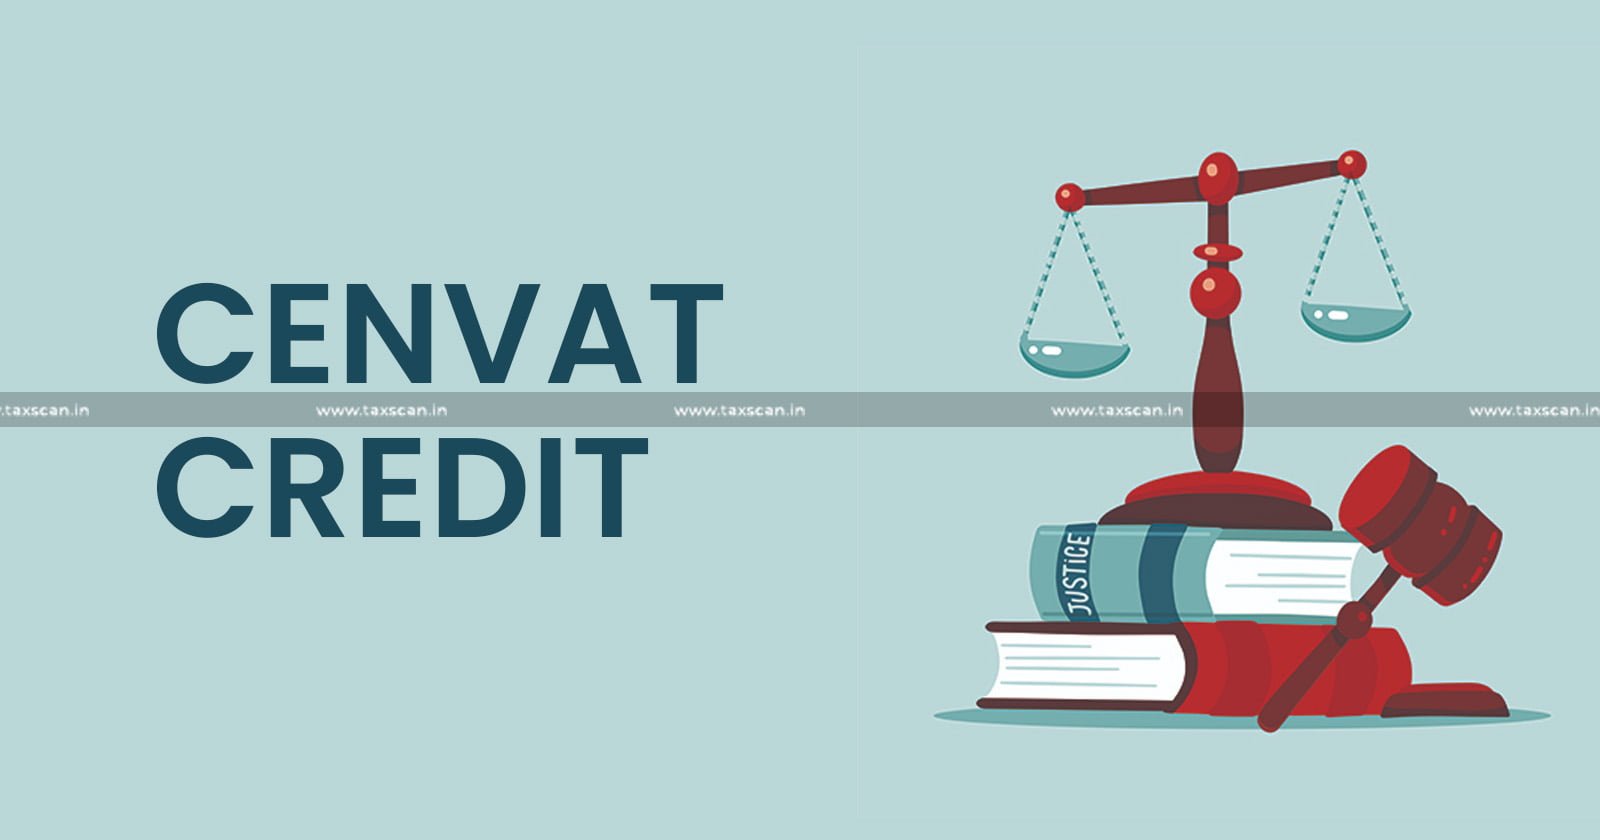 Rule 5 of Cenvat Credit Rules - CESTAT - Cenvat Credit in Cash - Refund of Utilized Cenvat Credit in Cash - Cenvat Credit Rules - taxscan